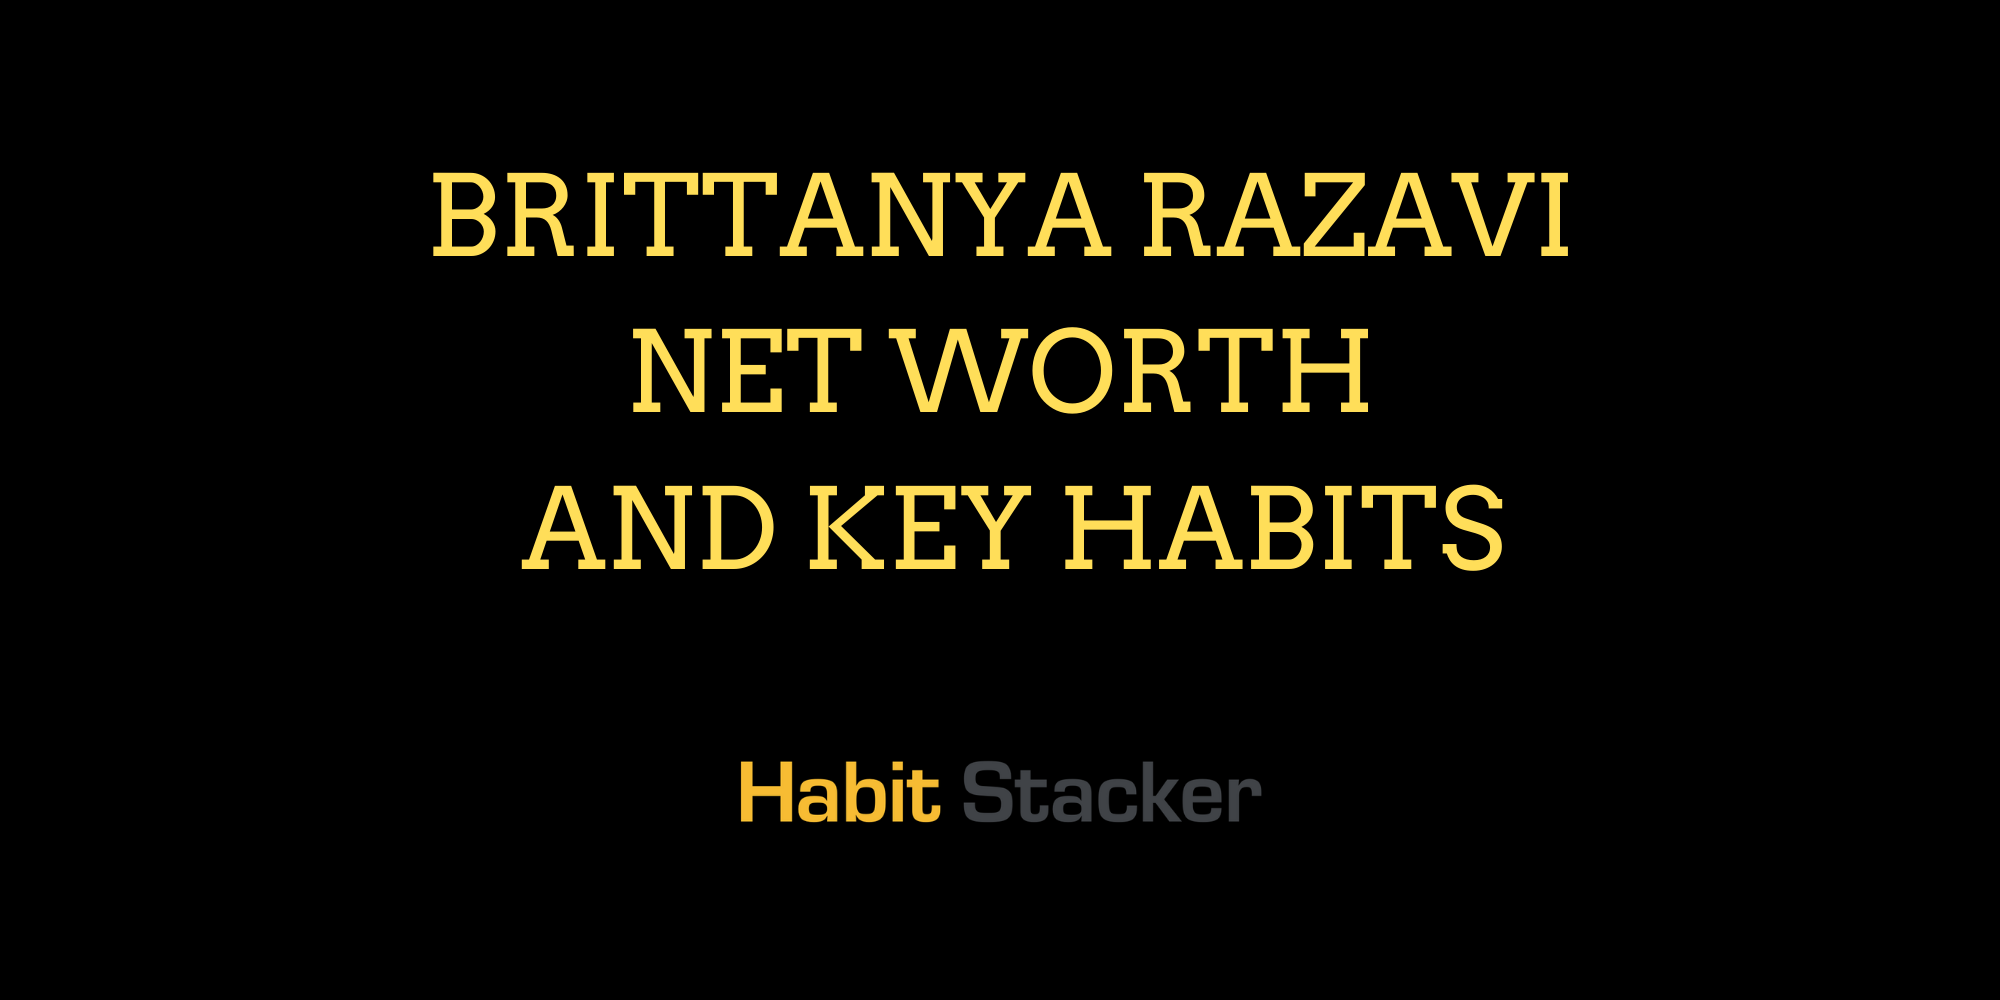 Brittanya Razavi Net Worth and Key Habits